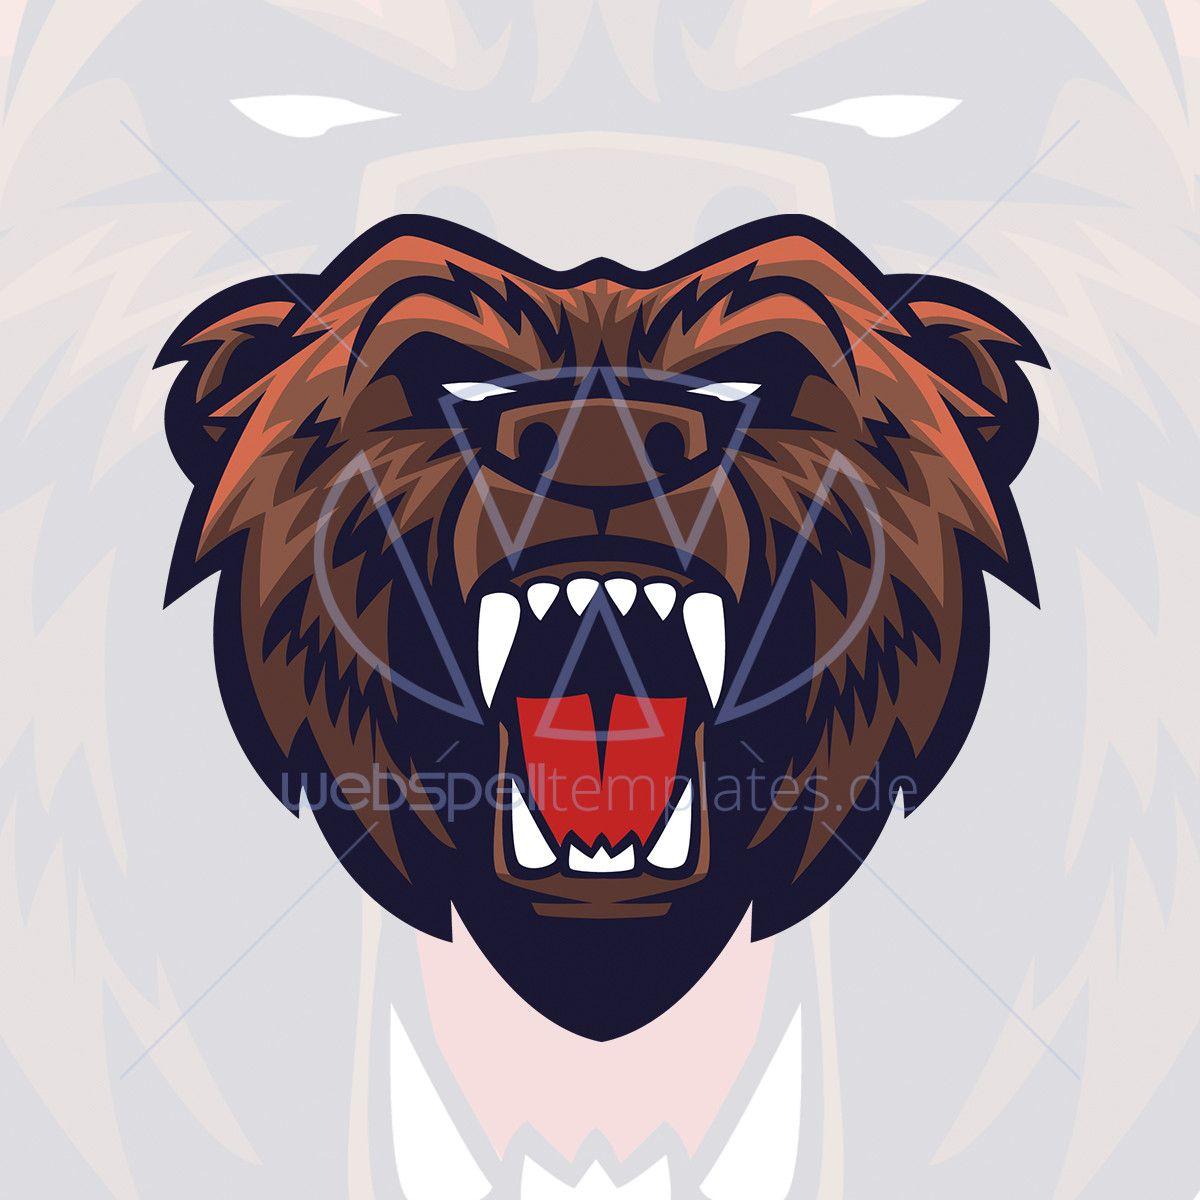 Grizzly Bear Logo - Webspelltemplates.de – Webspell TemplatesVector Grizzly Bear Clan ...